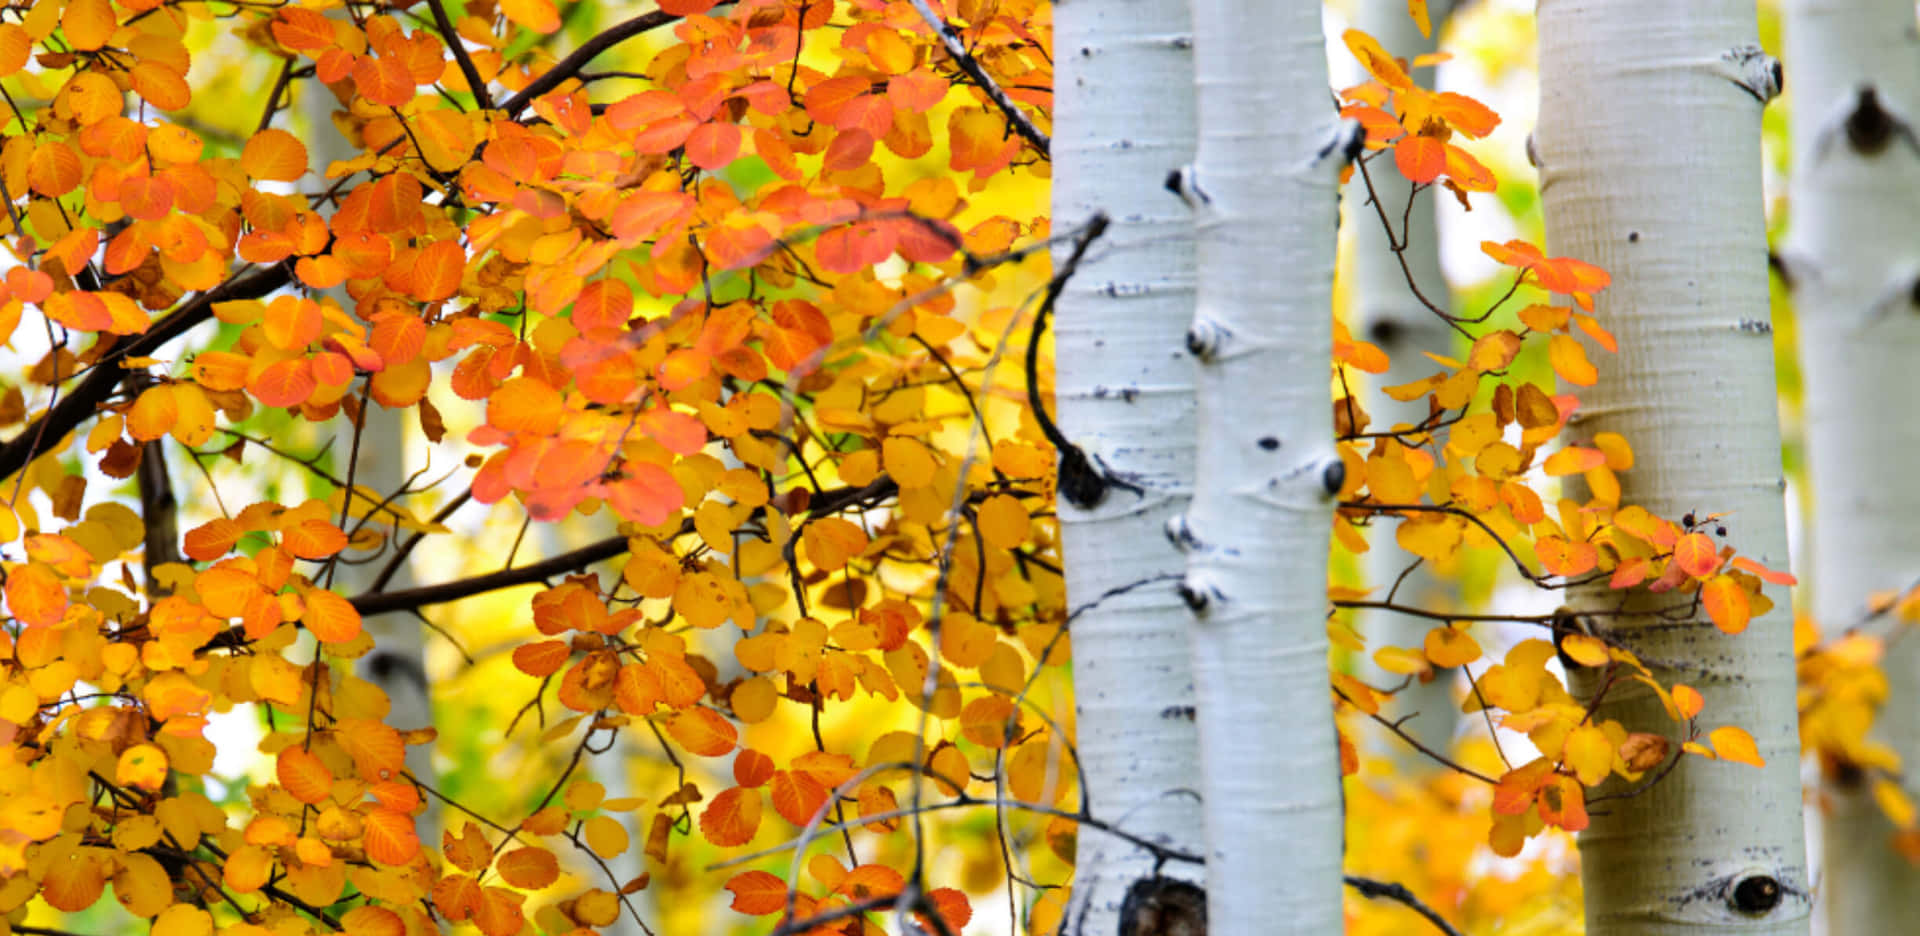 Vibrant Fall Colors in a Serene Landscape